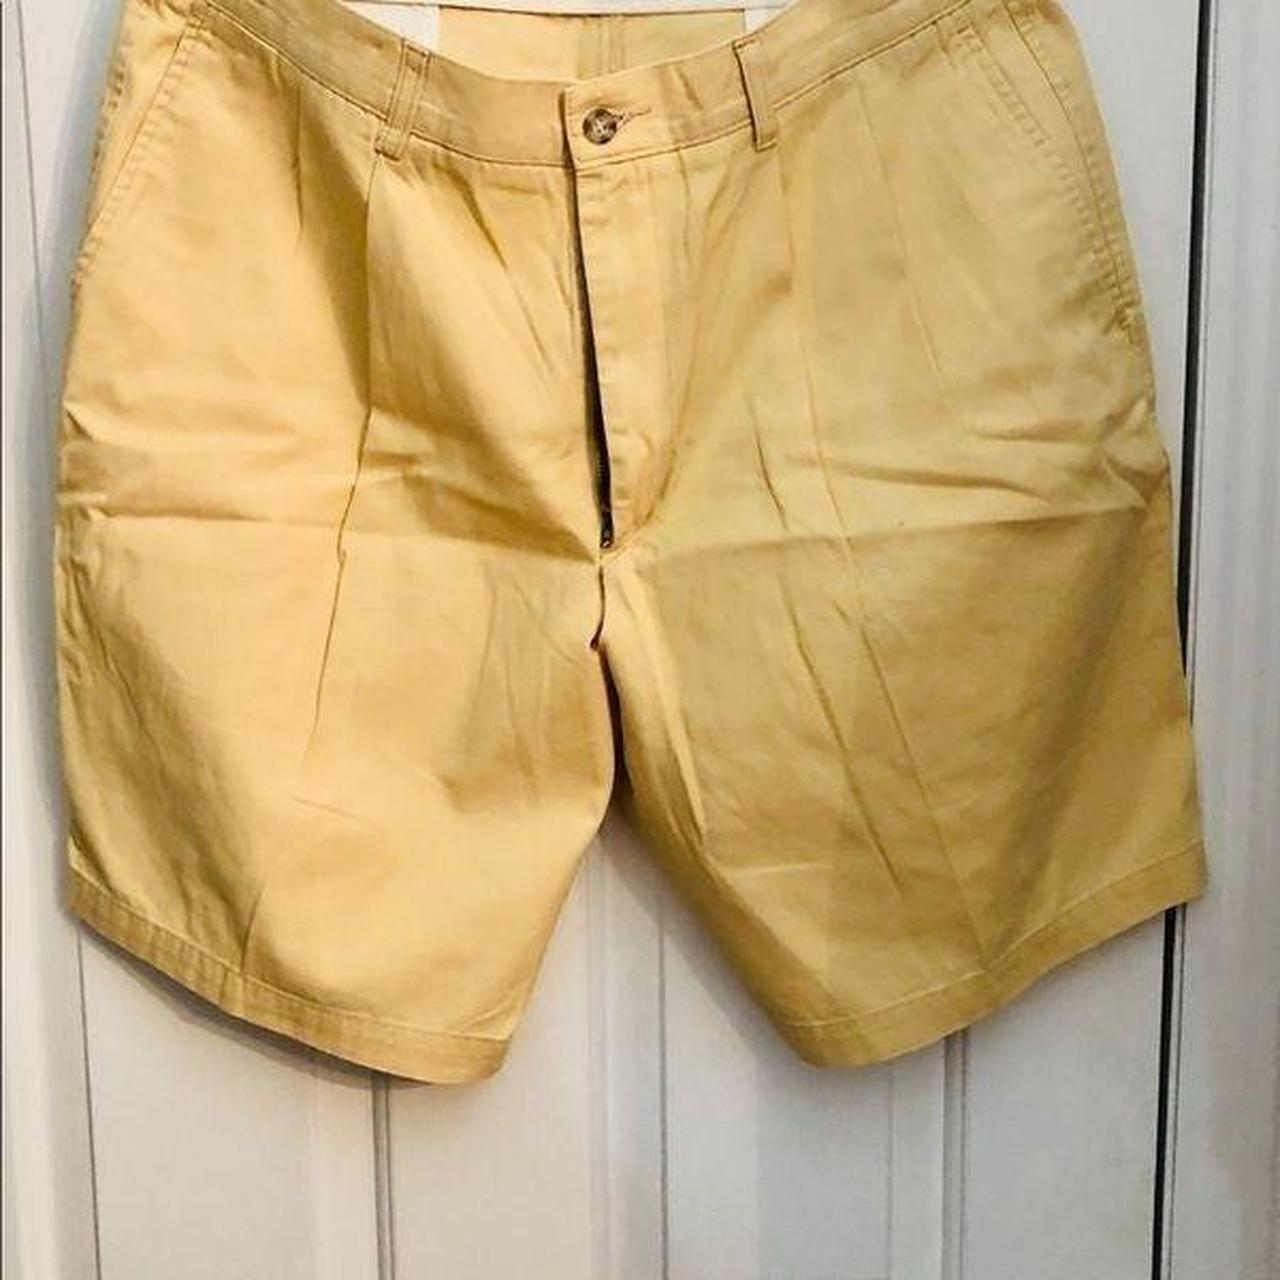 Product Image 3 - Men’s Dockers shorts. Excellent condition,